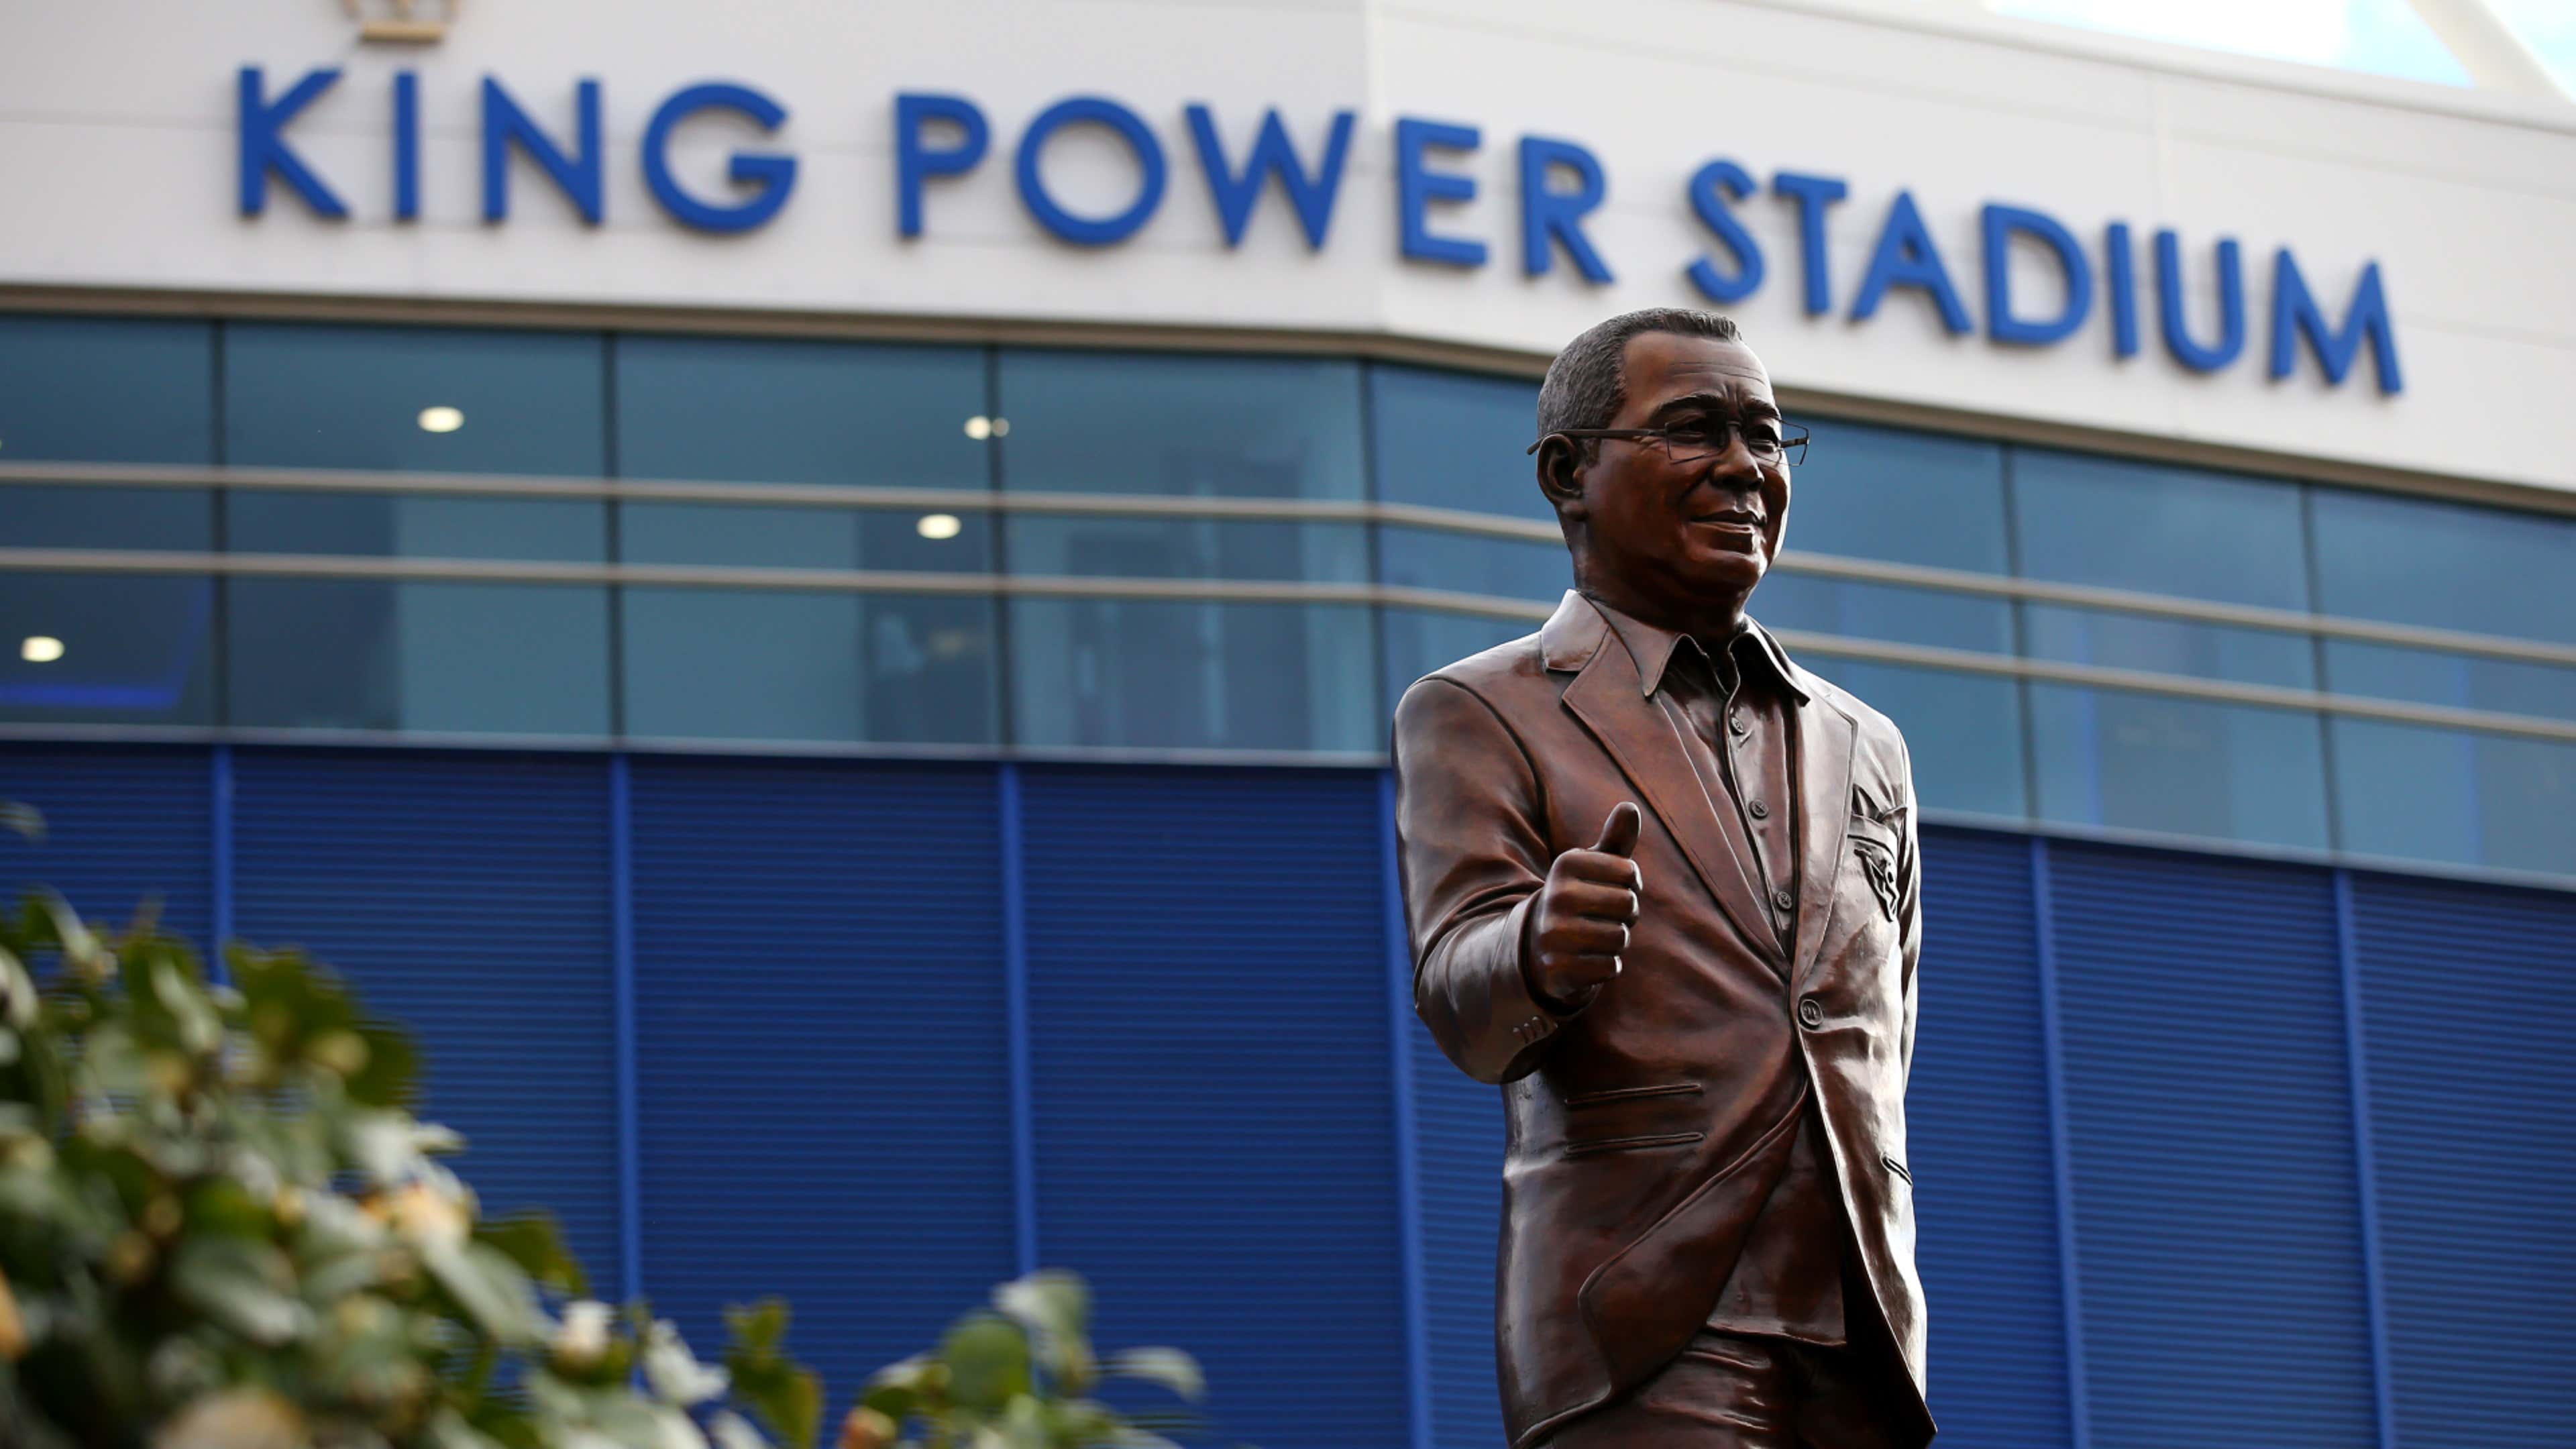 Statue Leicester City Vichai Srivaddhanaprabha King Power Stadium